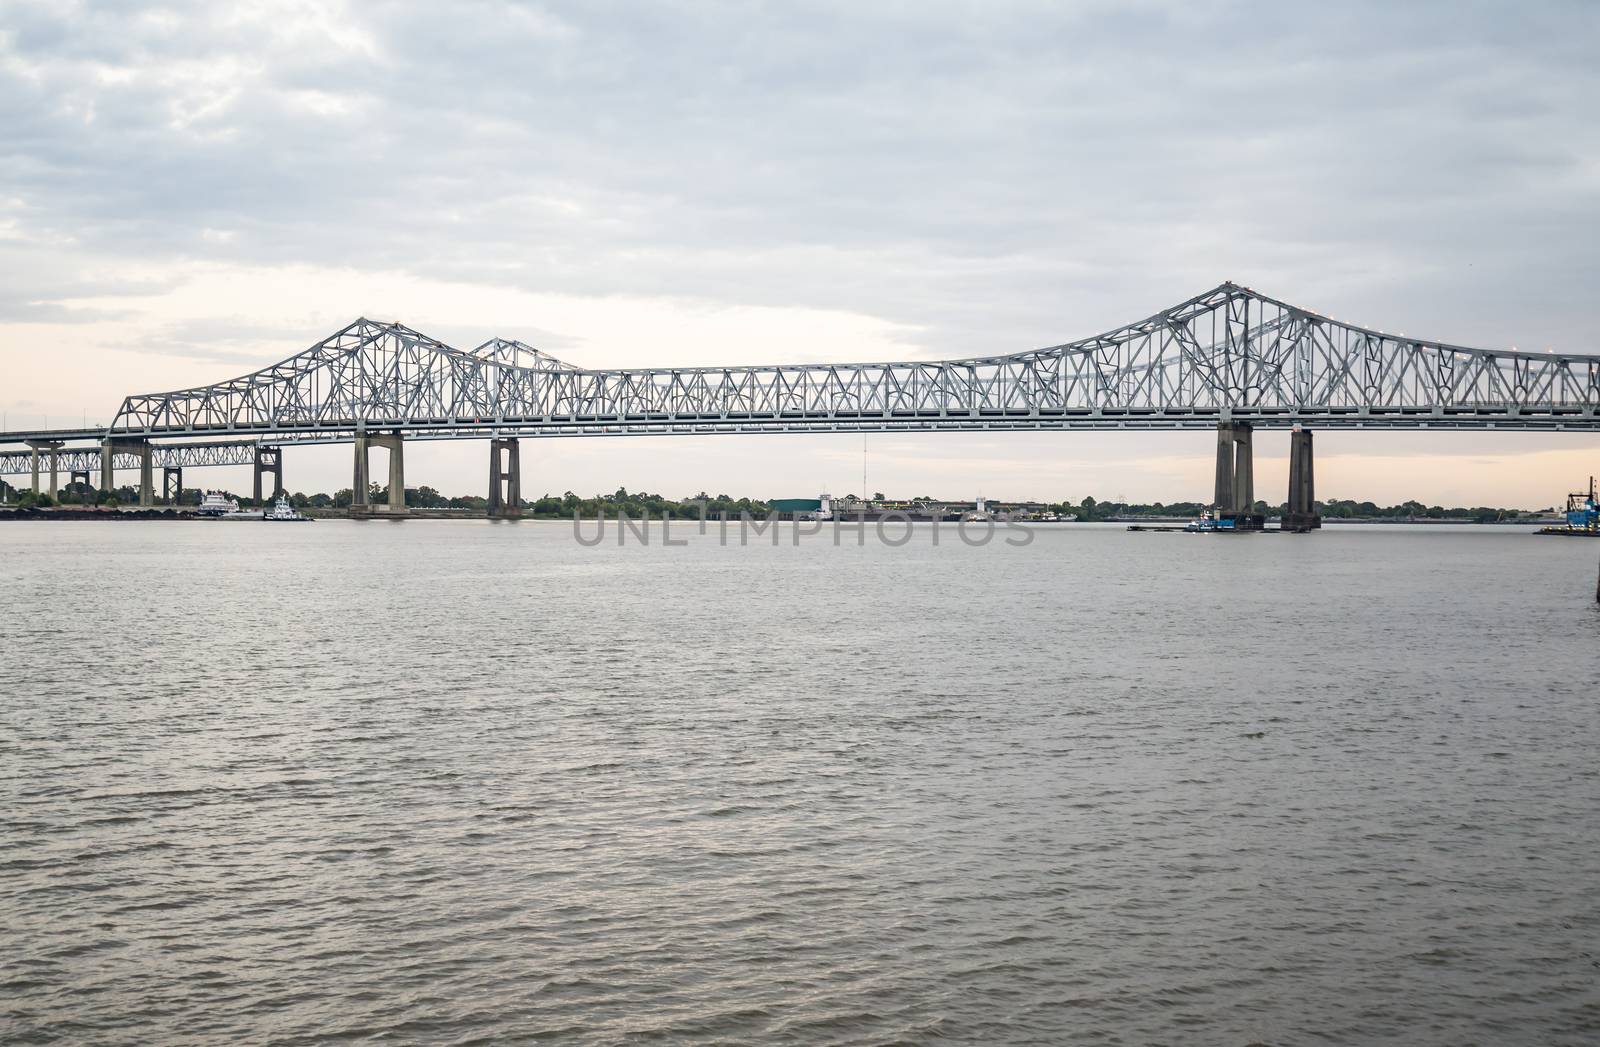 bridge over the Mississippi river in New Orleans, LA